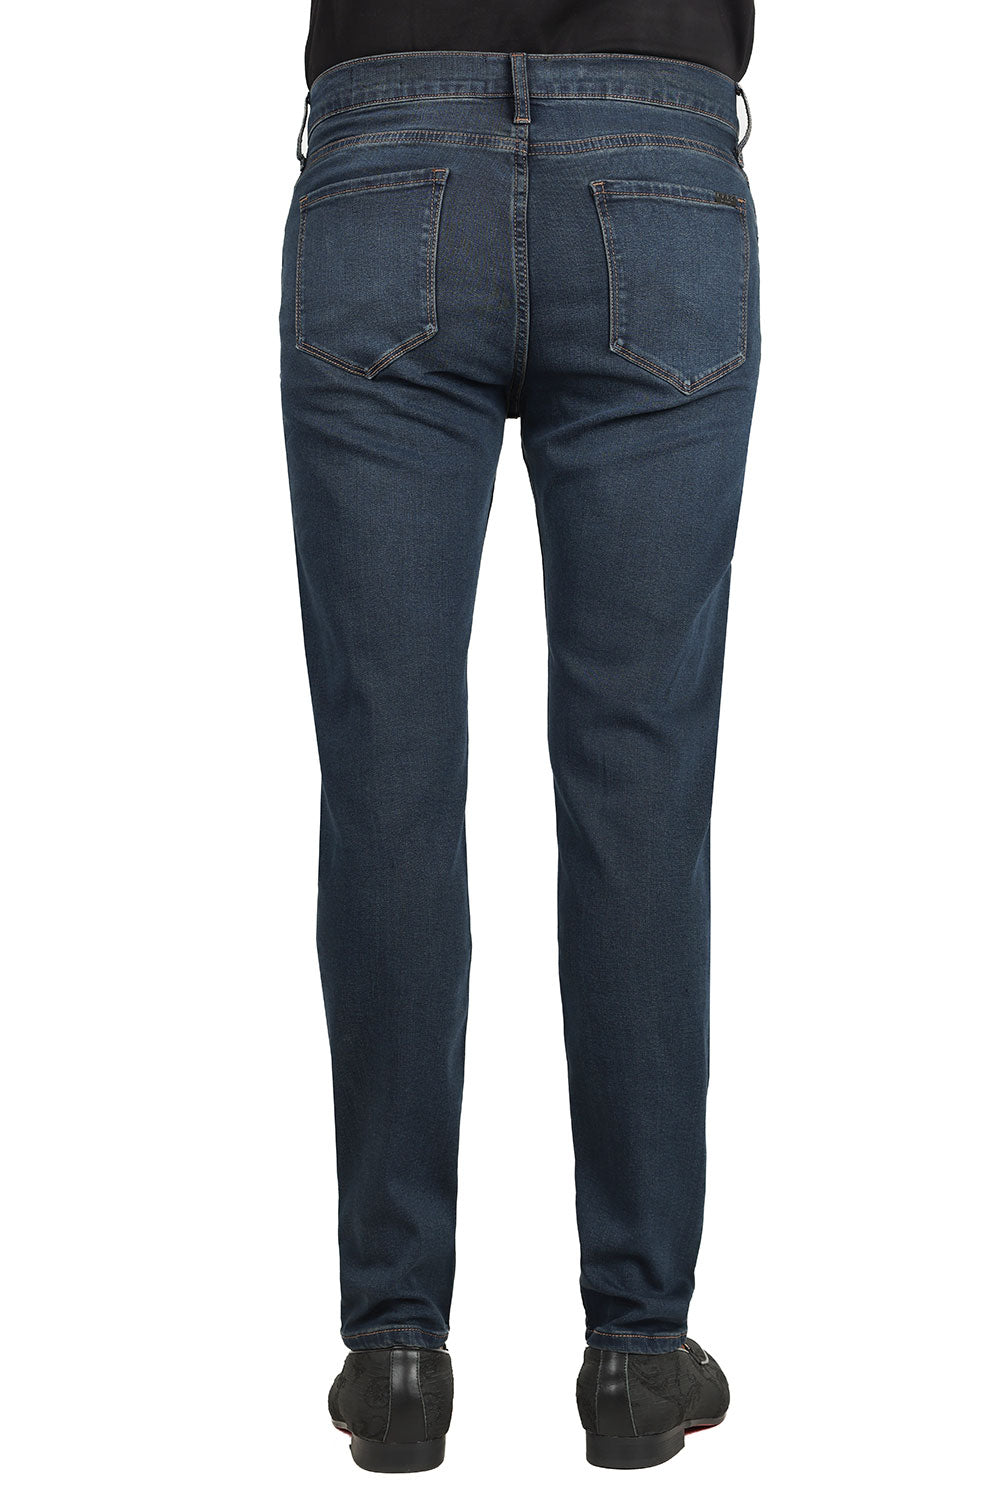 Barabas Men's Straight Fit Premium Dark Blue Denim Jeans 2JE13SL Dark Blue